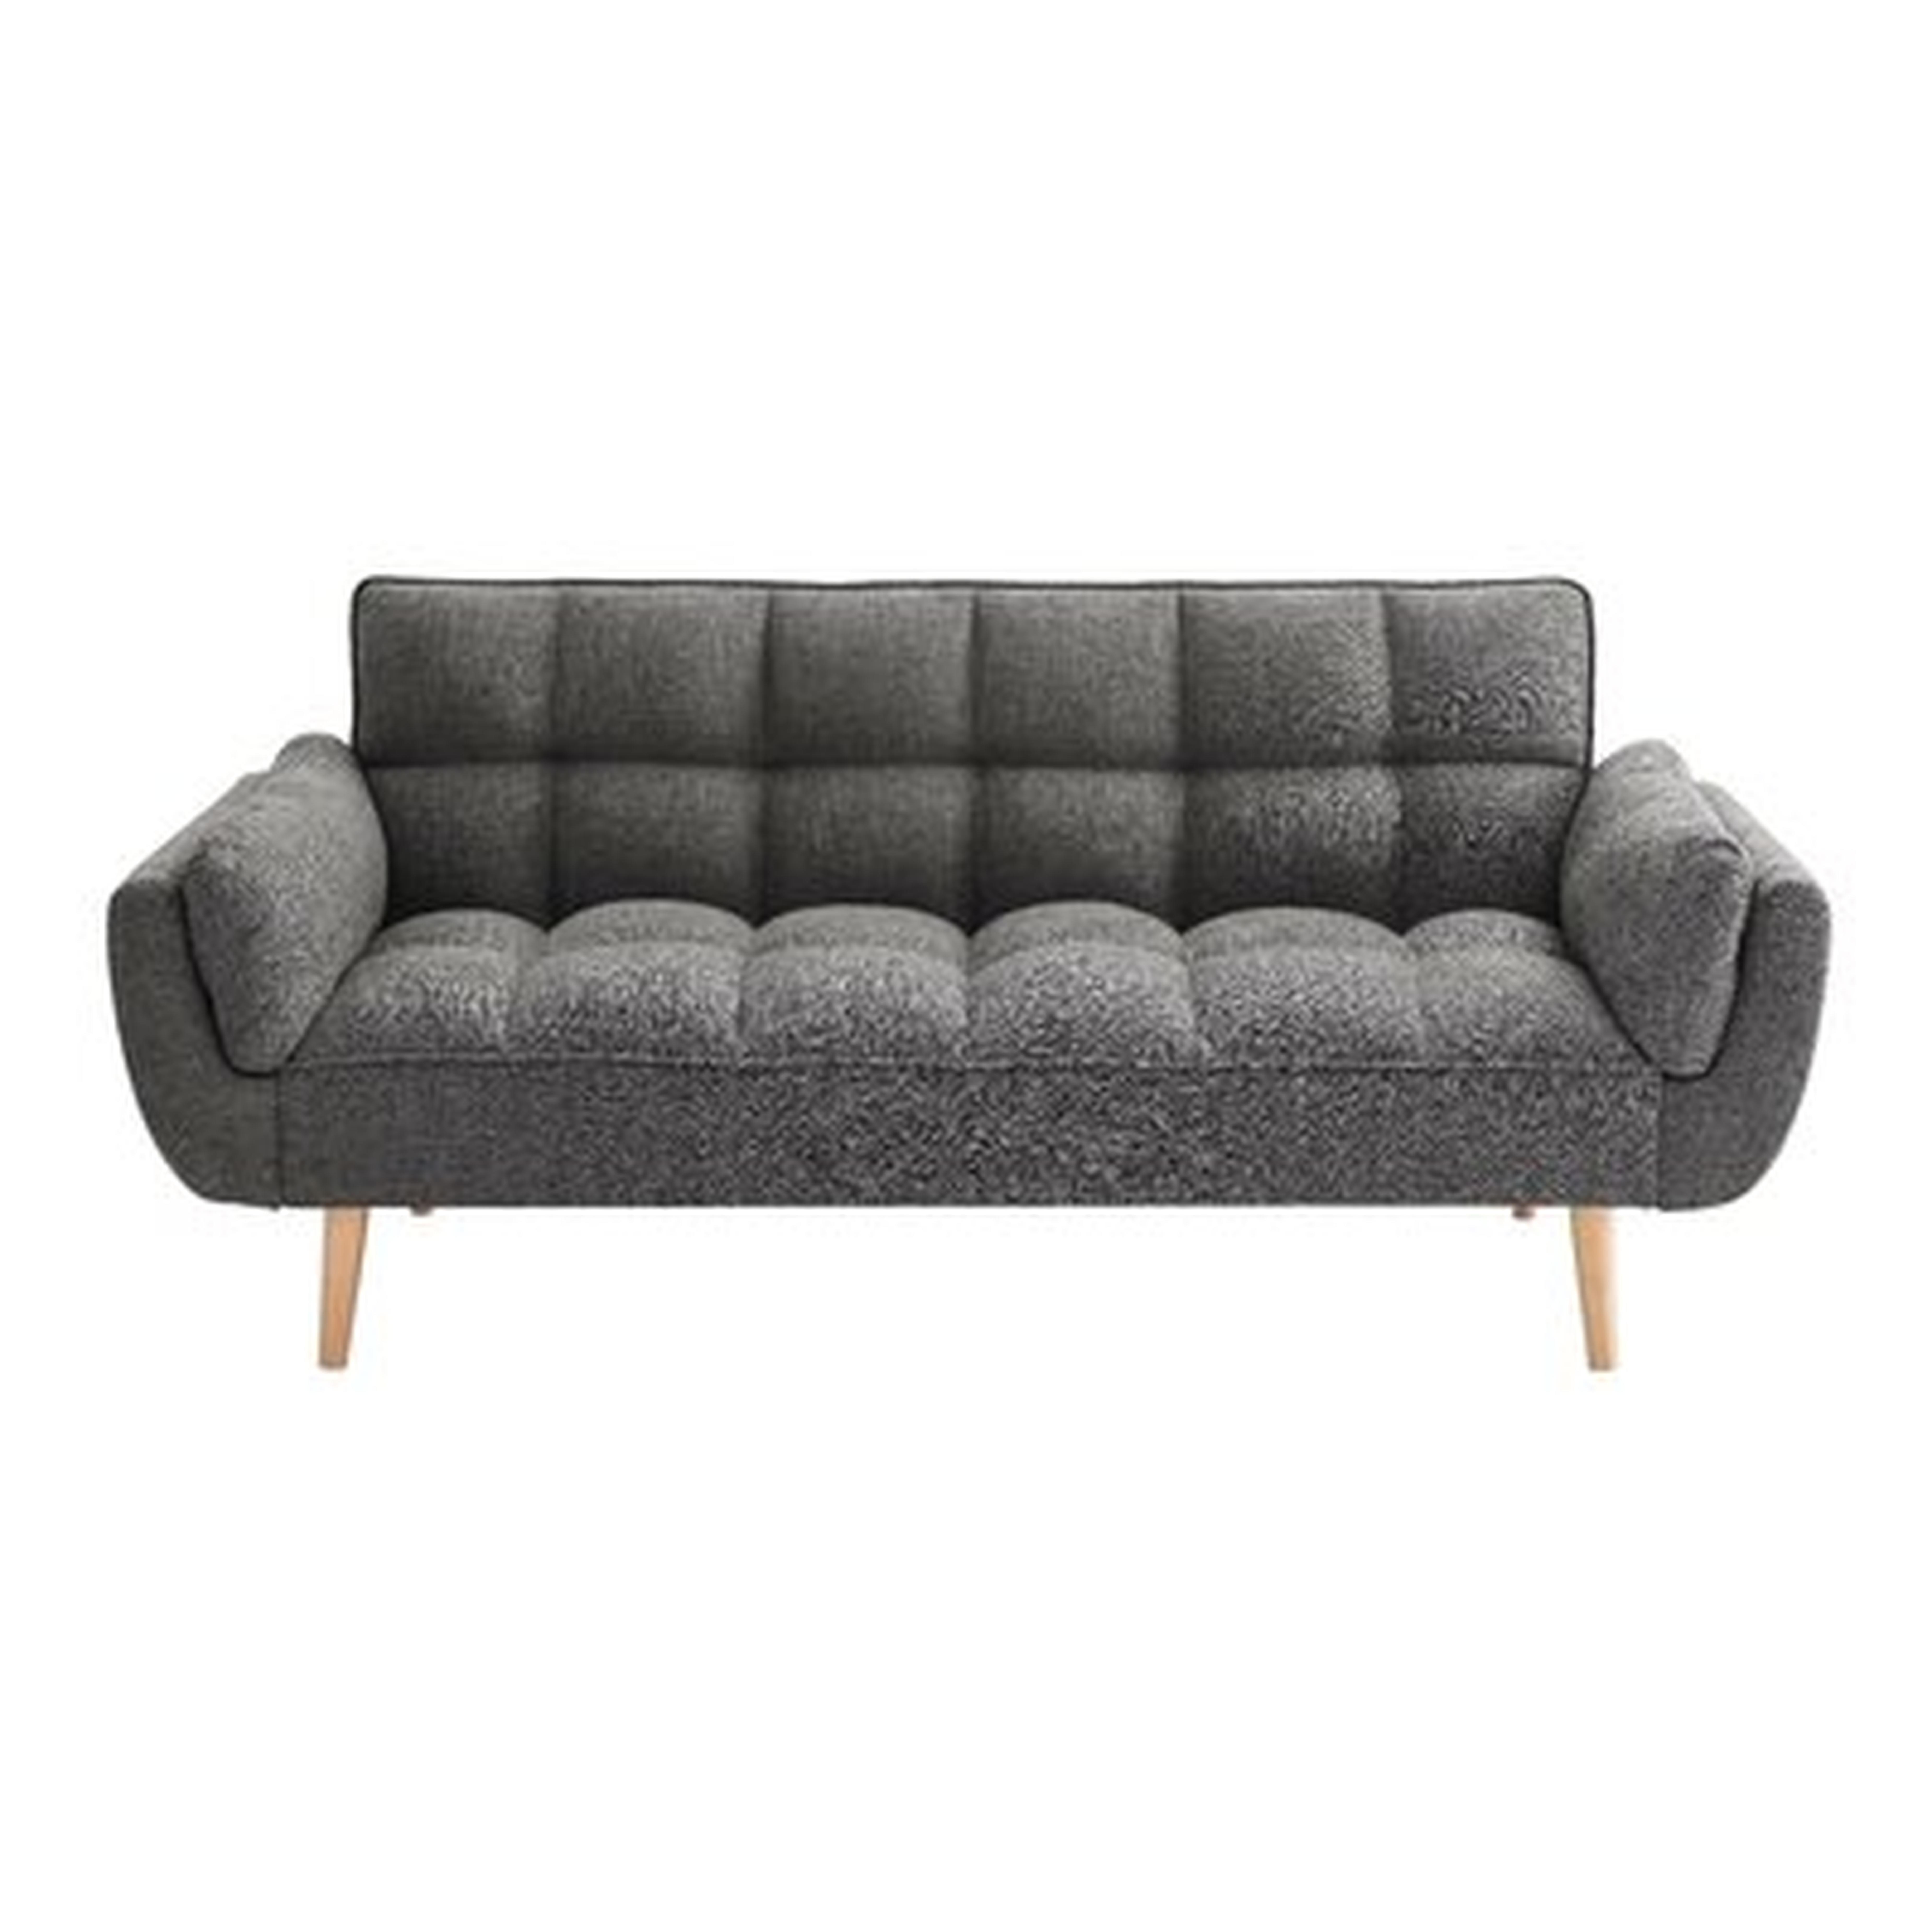 Clery Fabric Sofa Bed, Light Grey - Wayfair